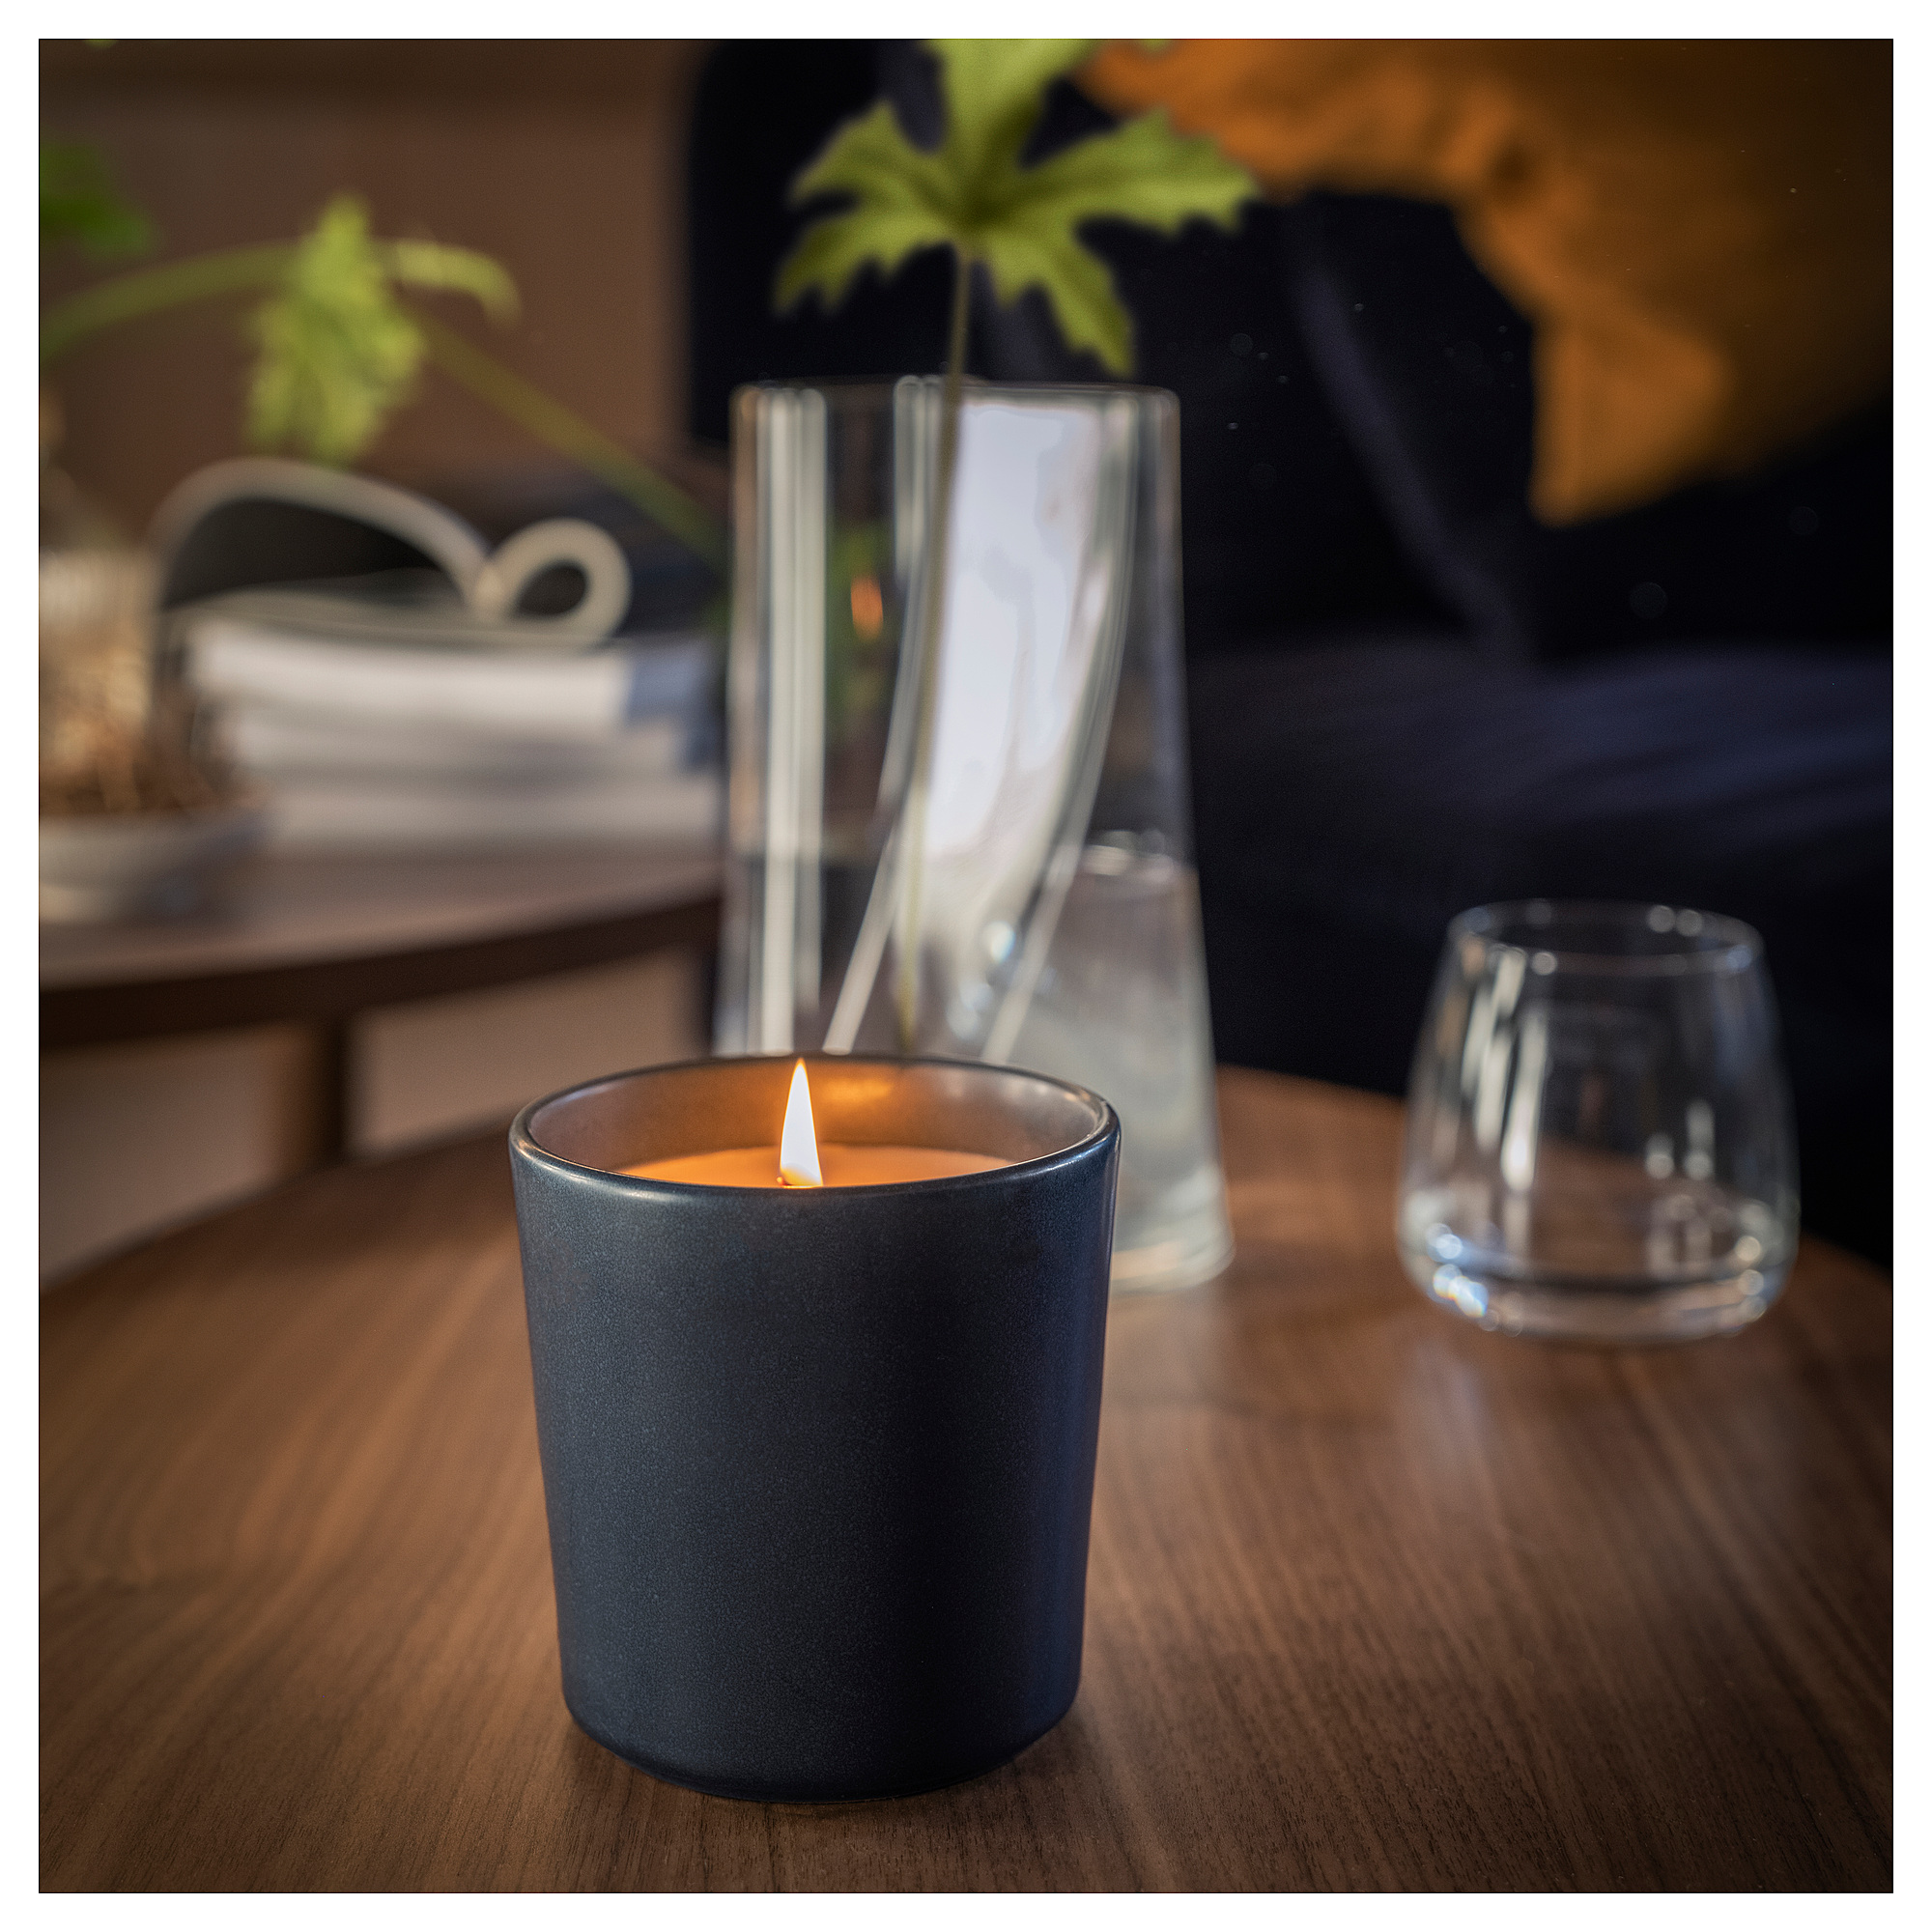 FRUKTSKOG scented candle in ceramic jar